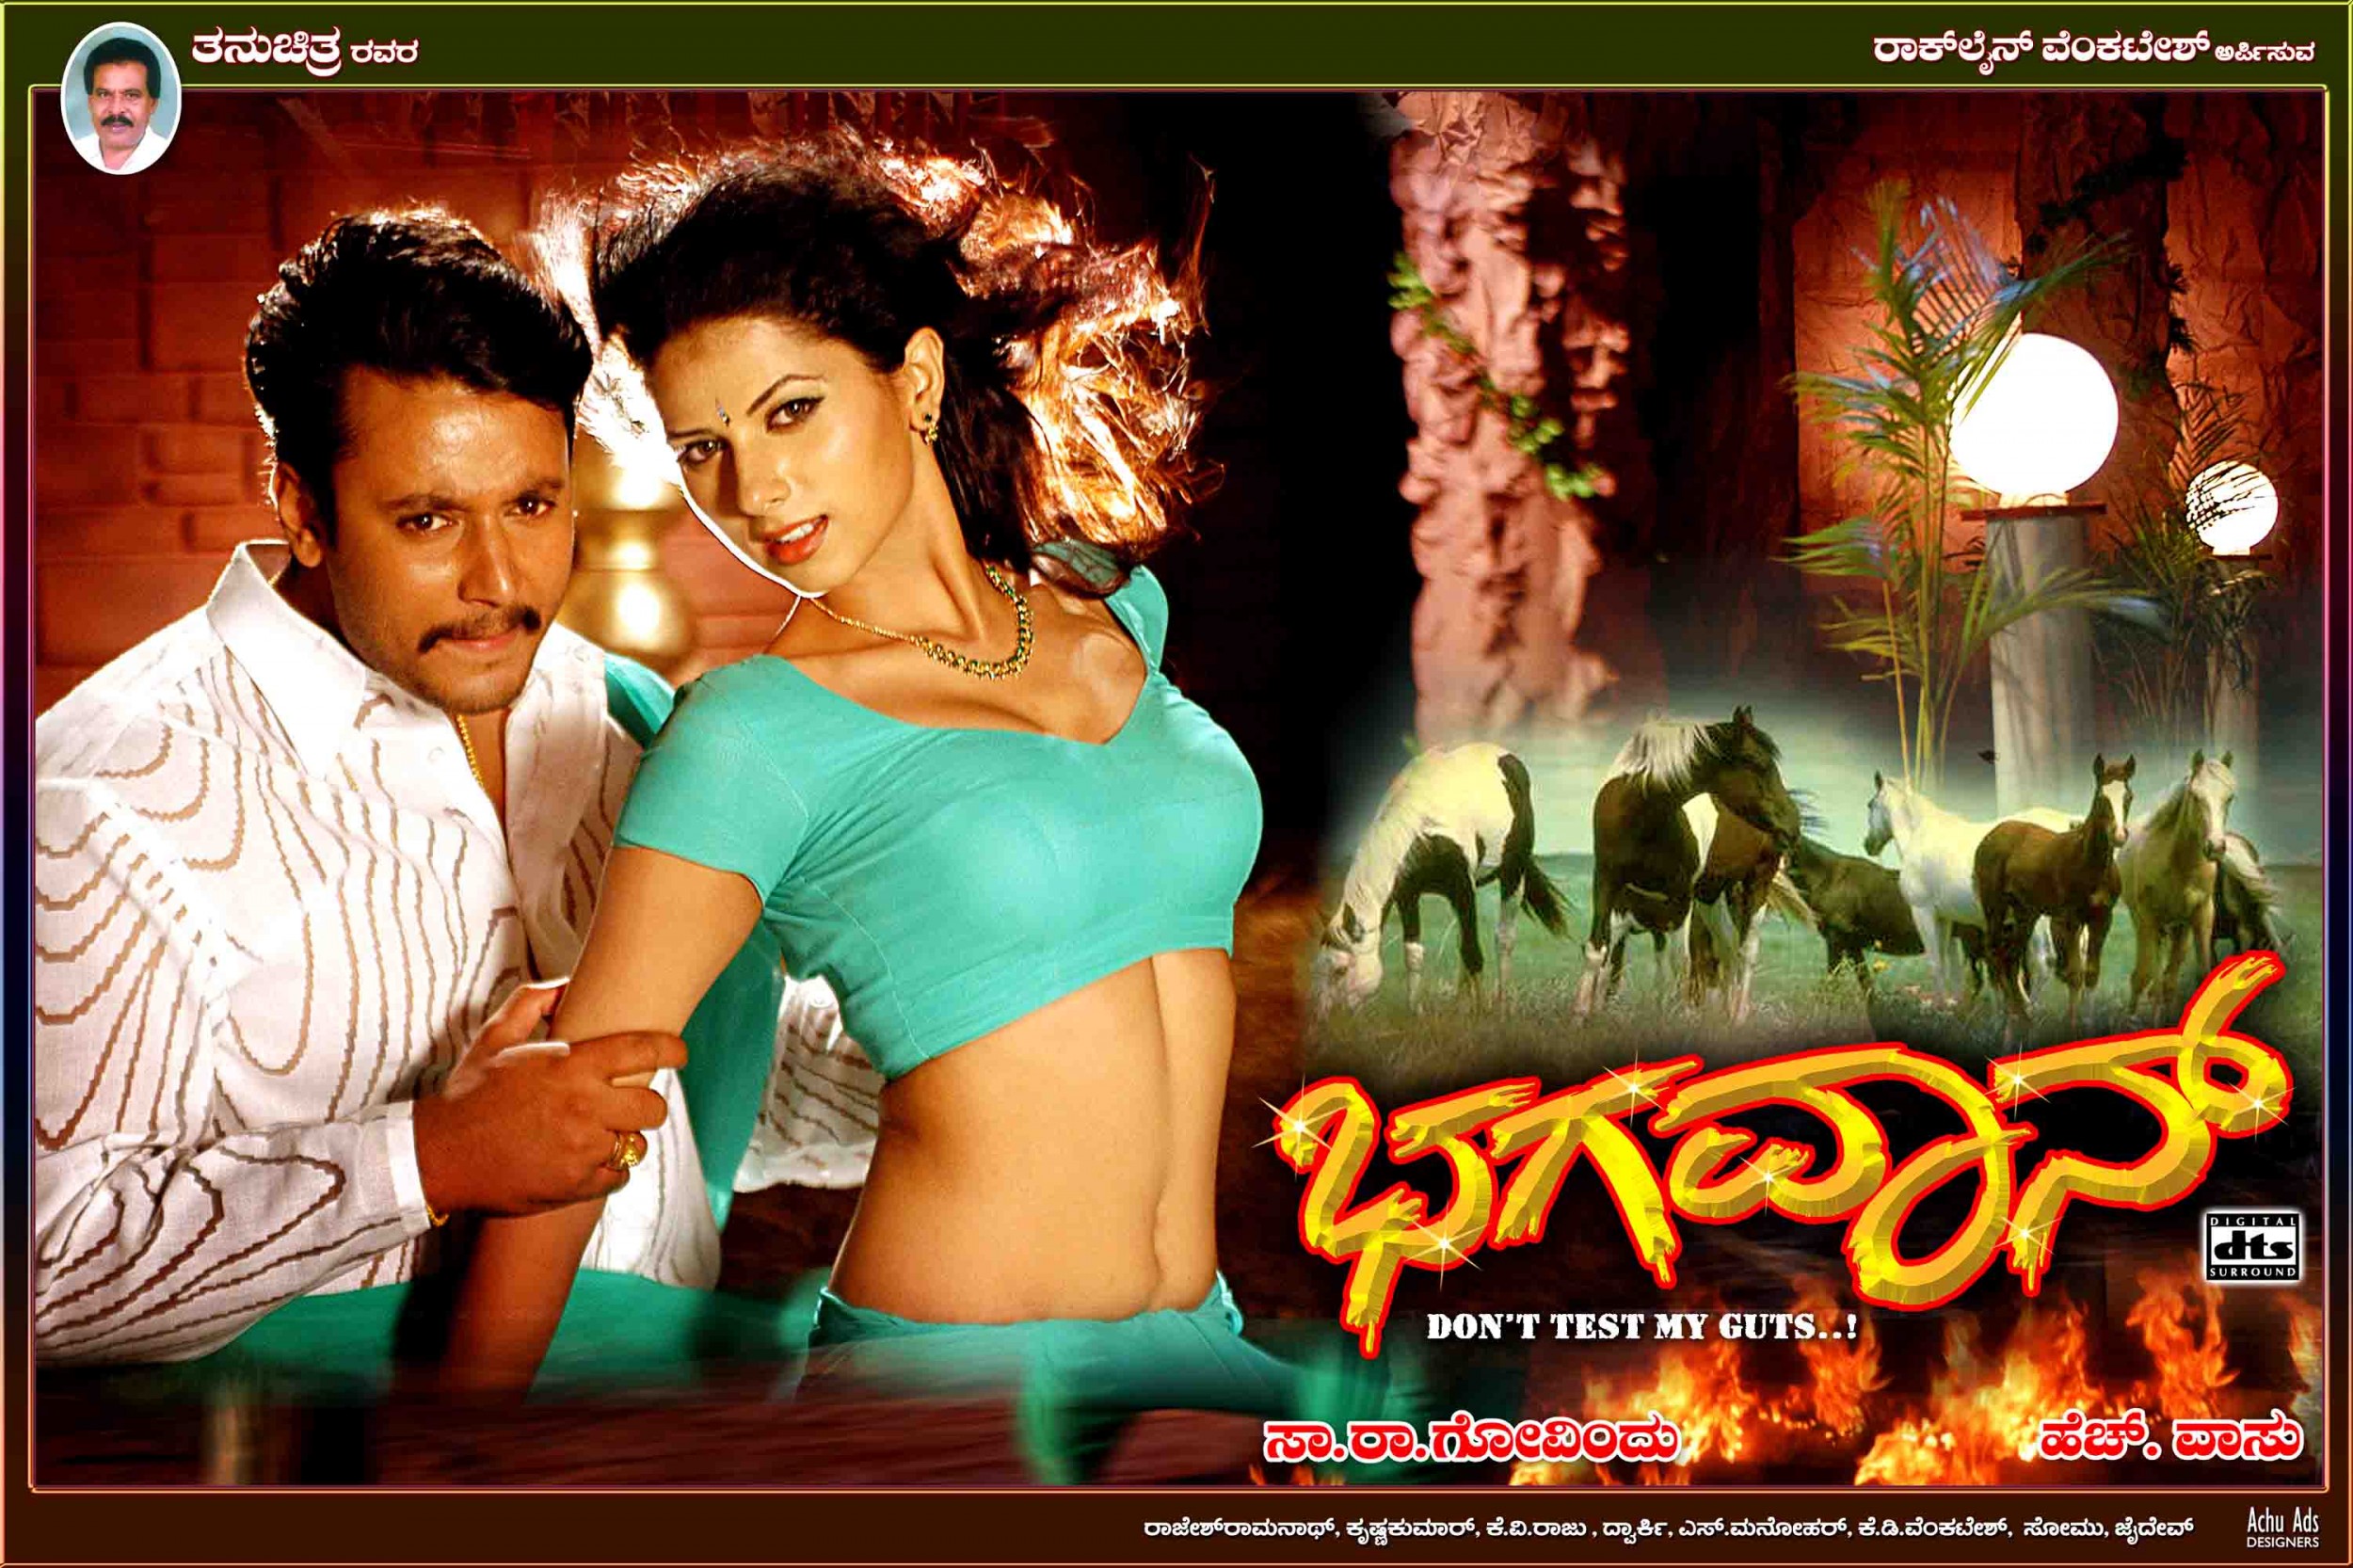 Mega Sized Movie Poster Image for Bhagavan (#2 of 4)